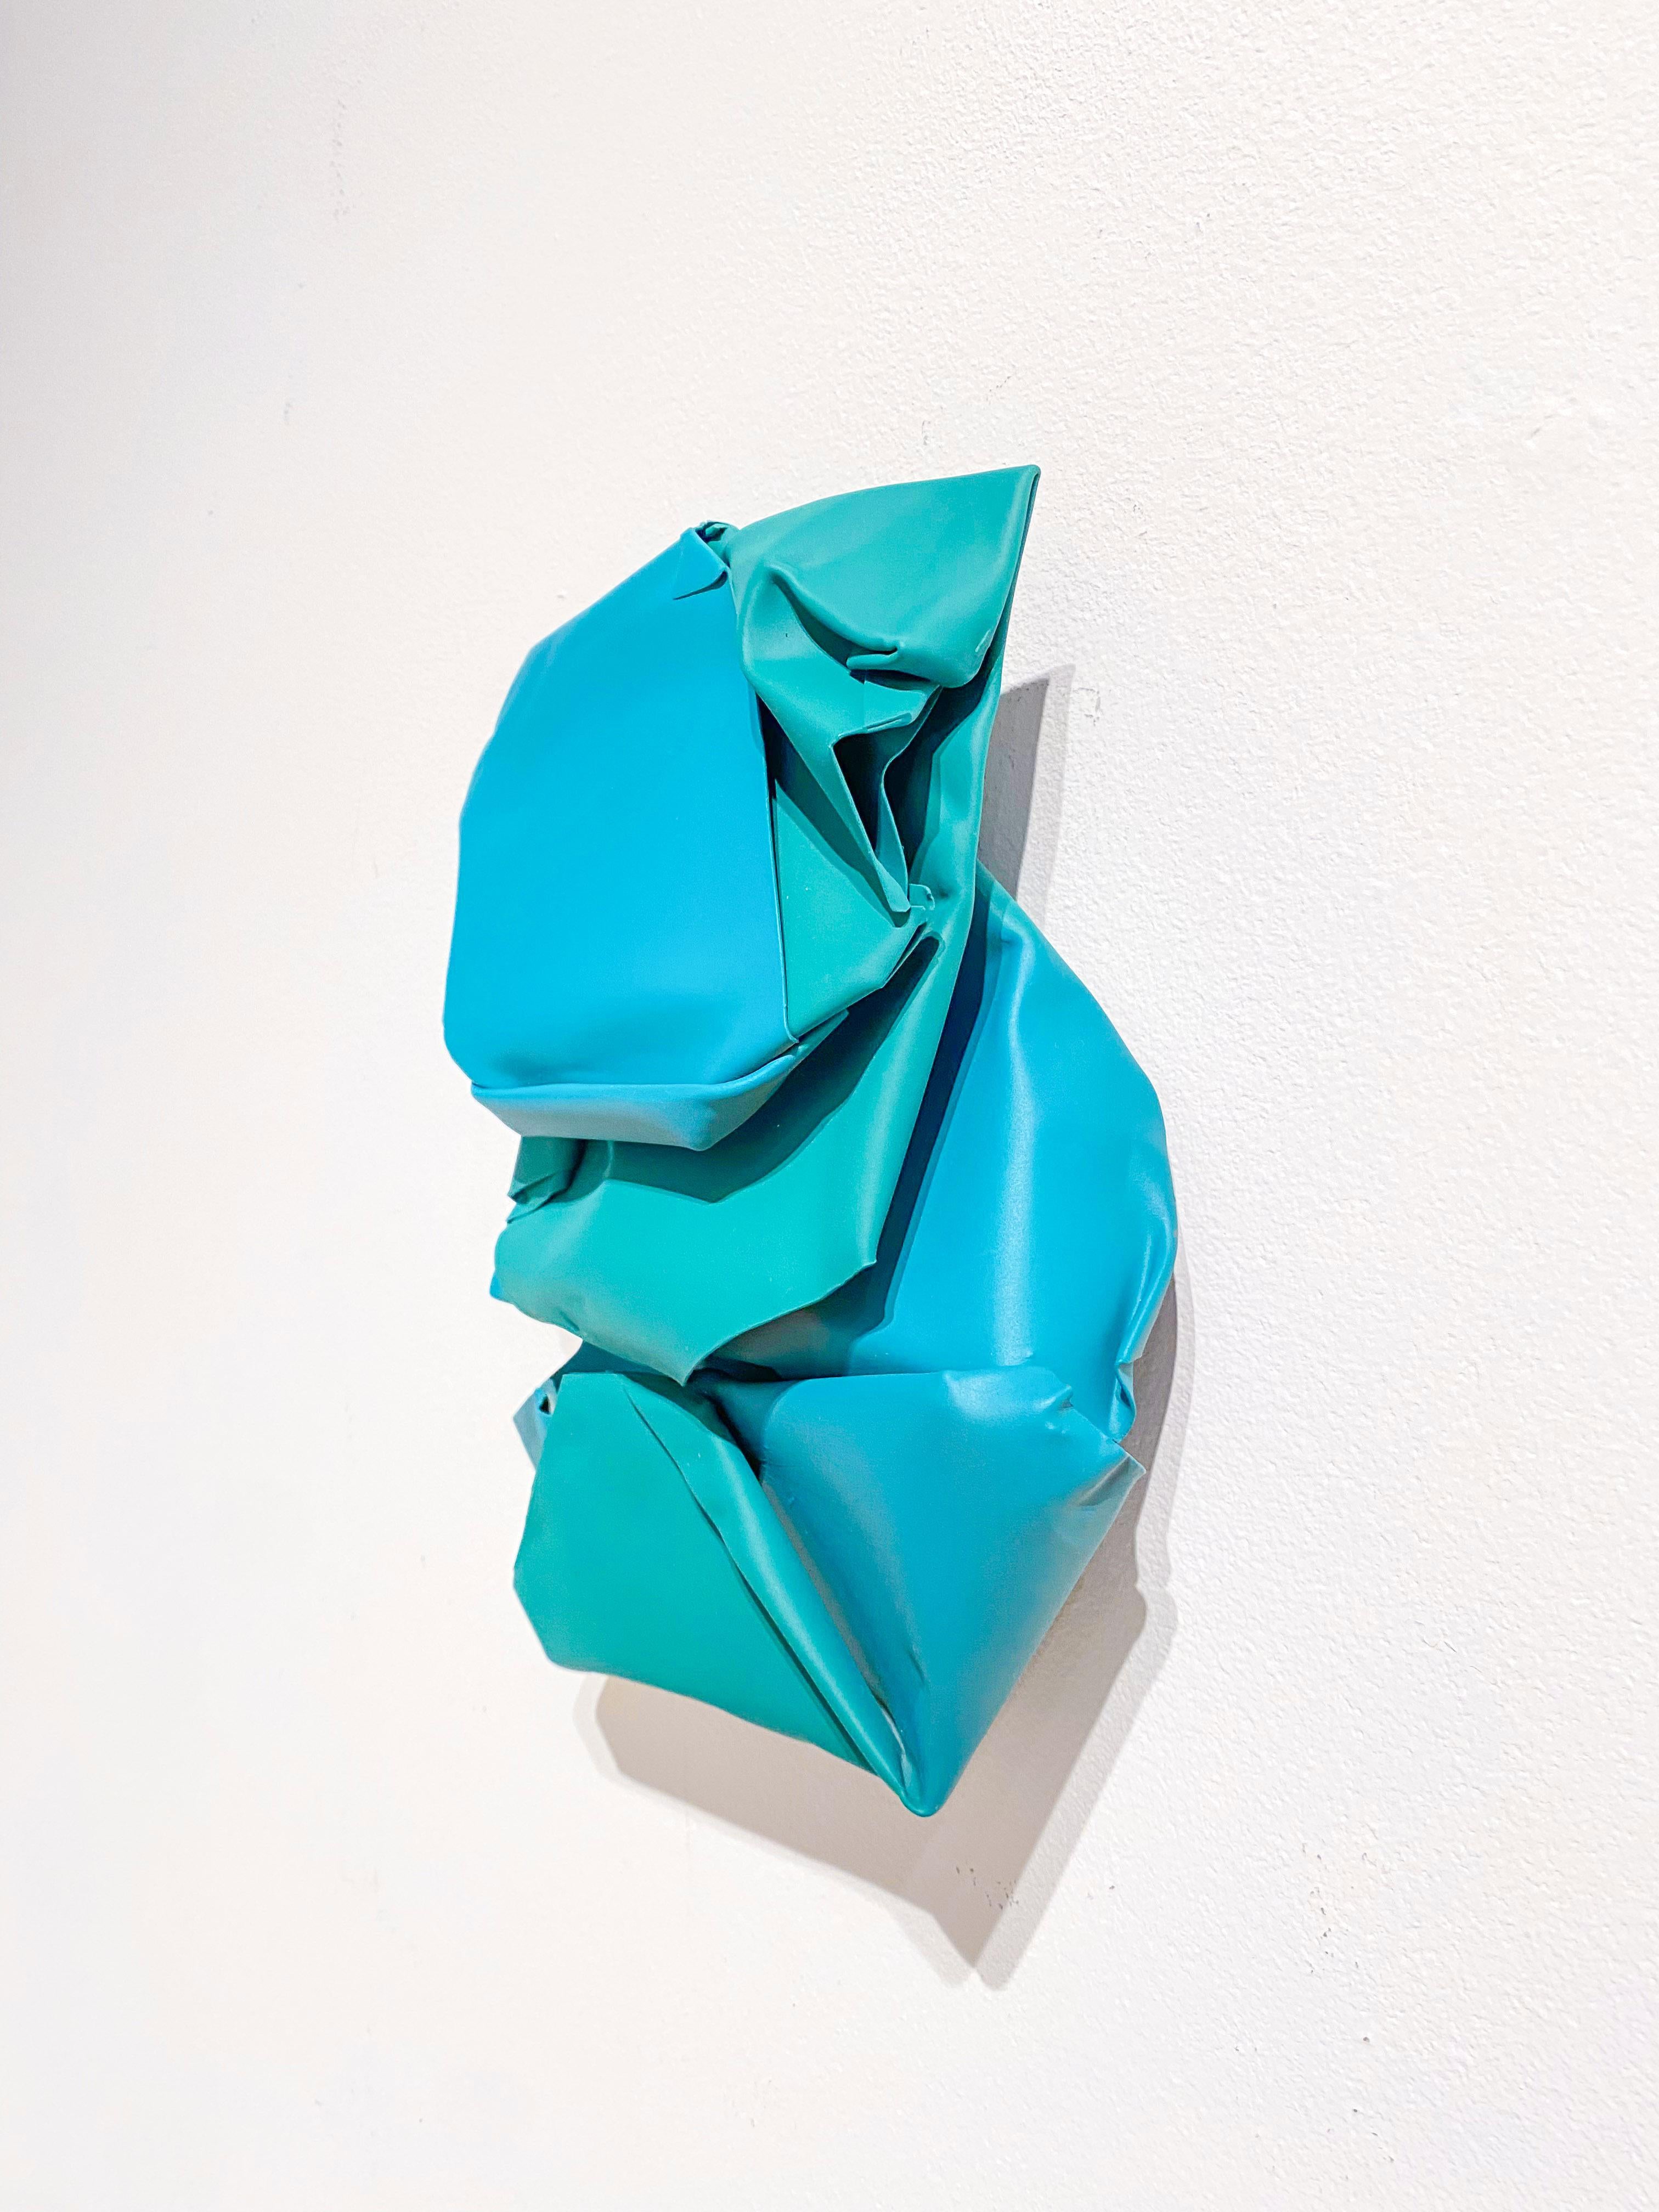 Fajenca Figuro - Contemporary Sculpture by Robert Burnier